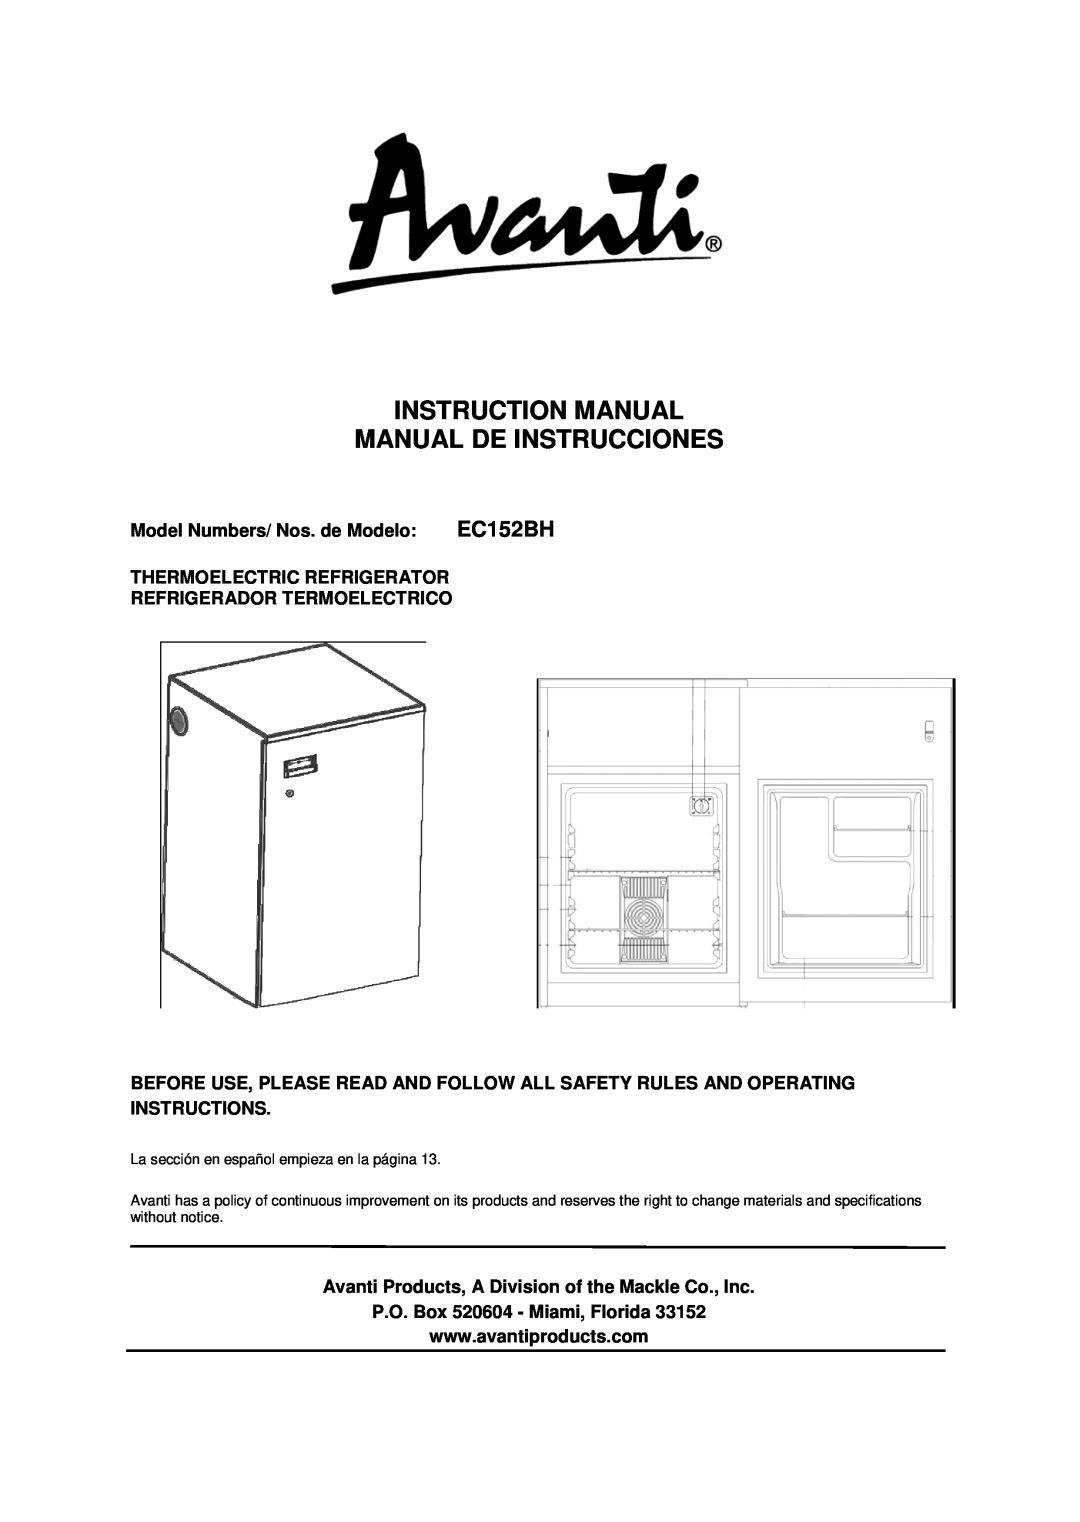 Avanti instruction manual Model Numbers/ Nos. de Modelo EC152BH, Thermoelectric Refrigerator 